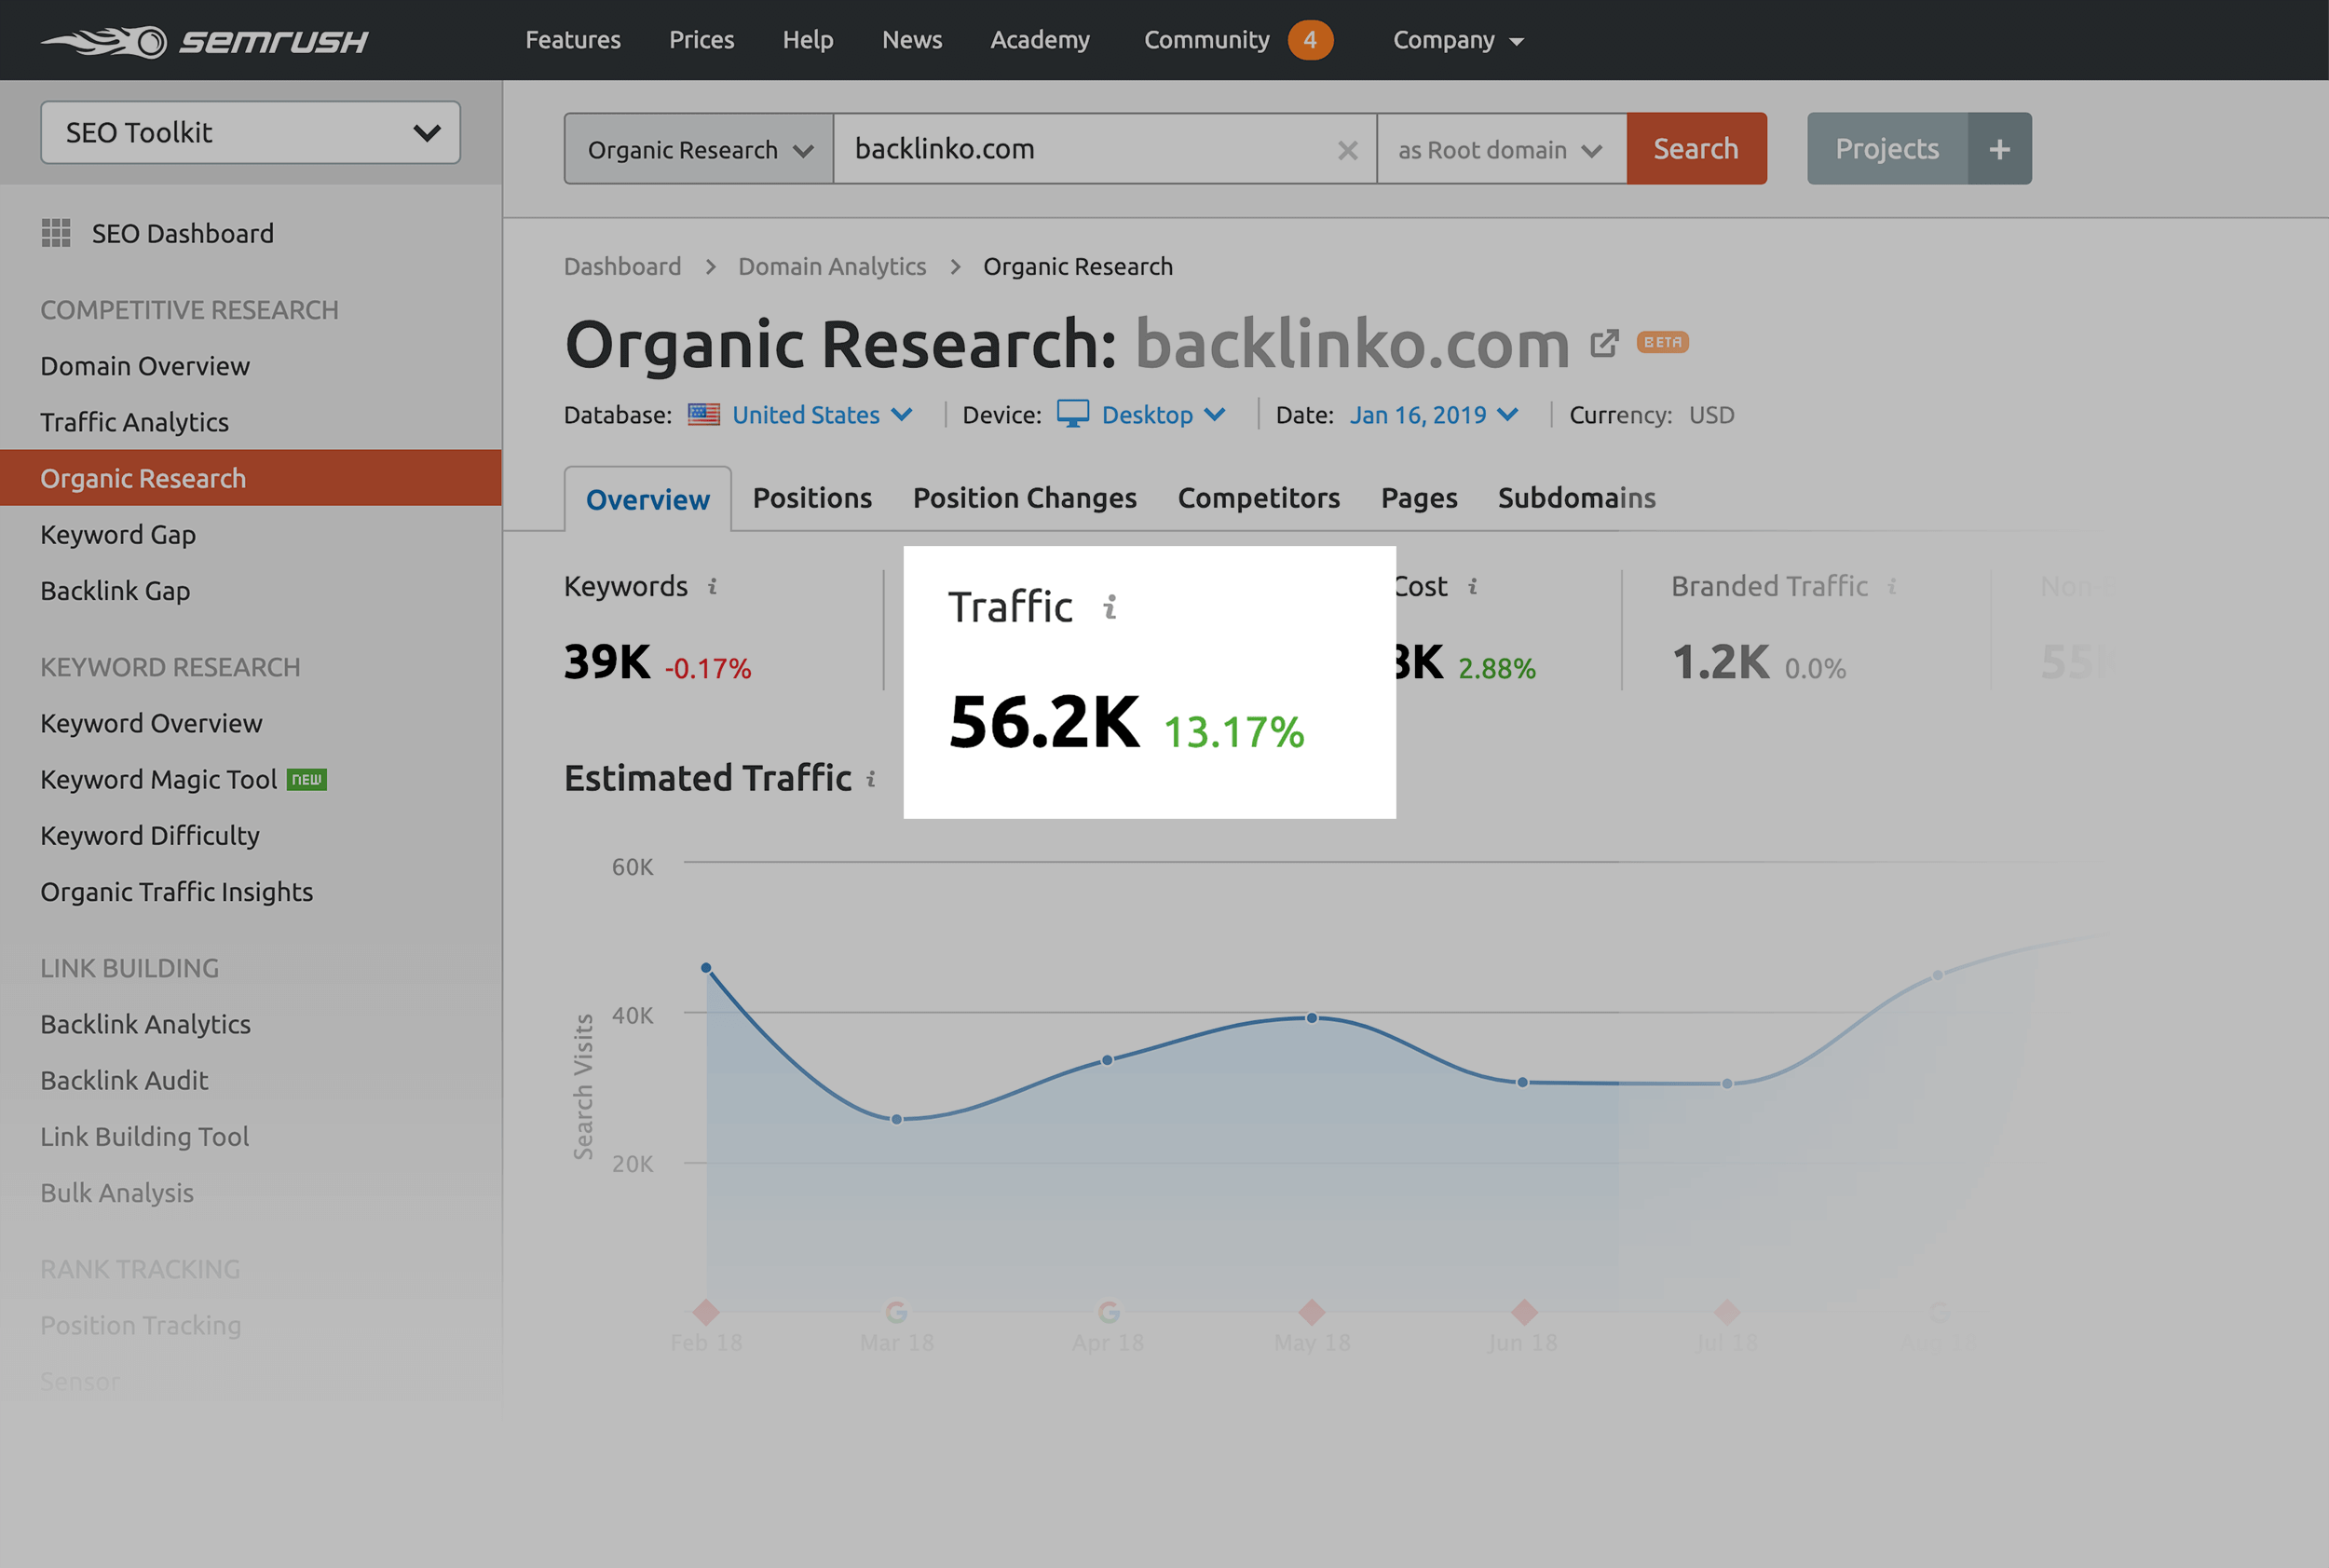 Organic research traffic